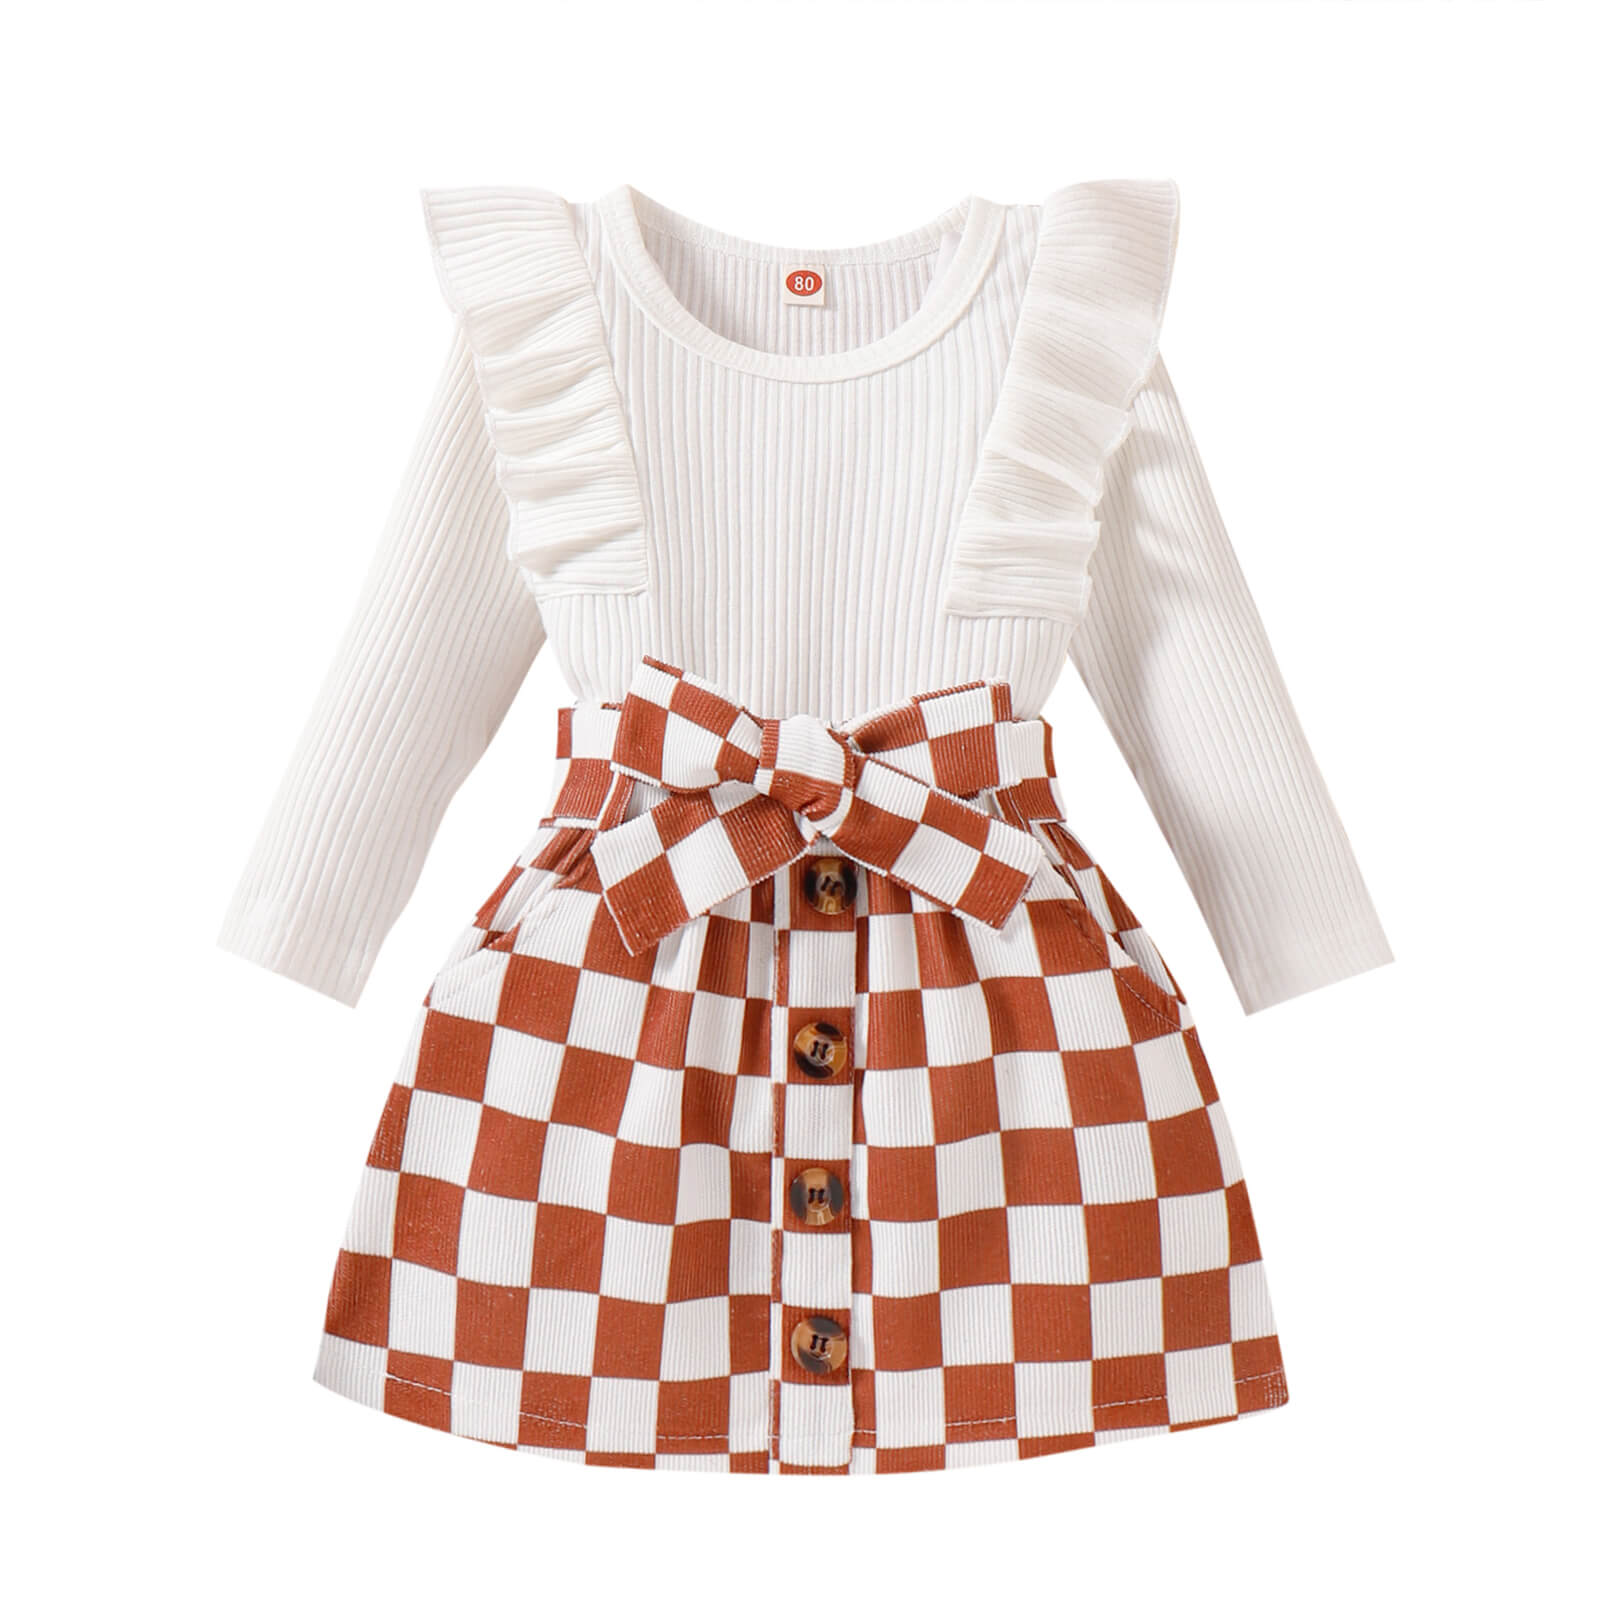 Toddler Checkerboard Skirt Set.